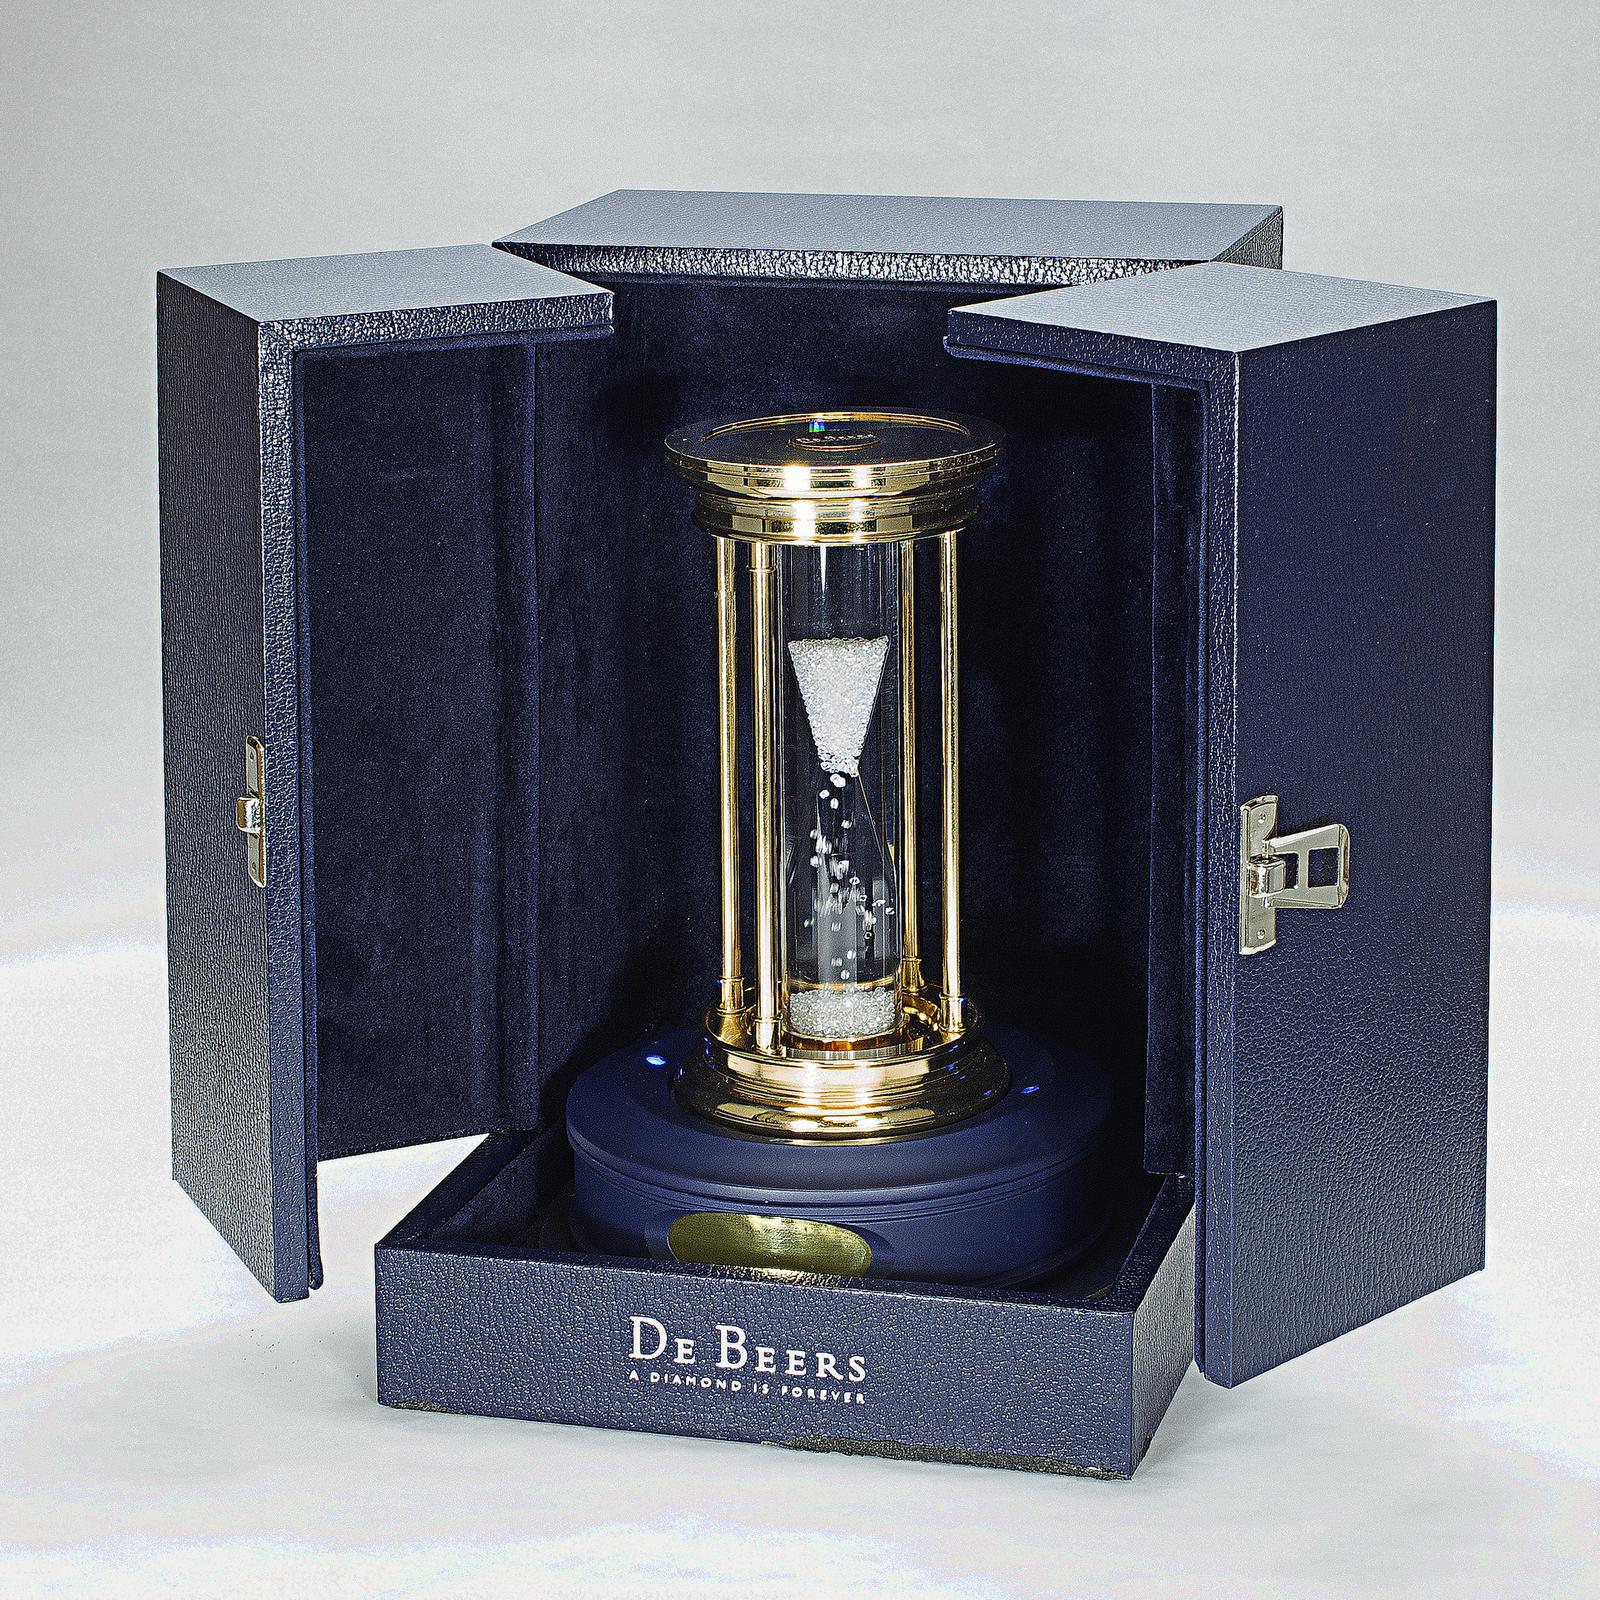 Sold at Auction: De Beers, De Beers Diamond, Gold Plated Brass